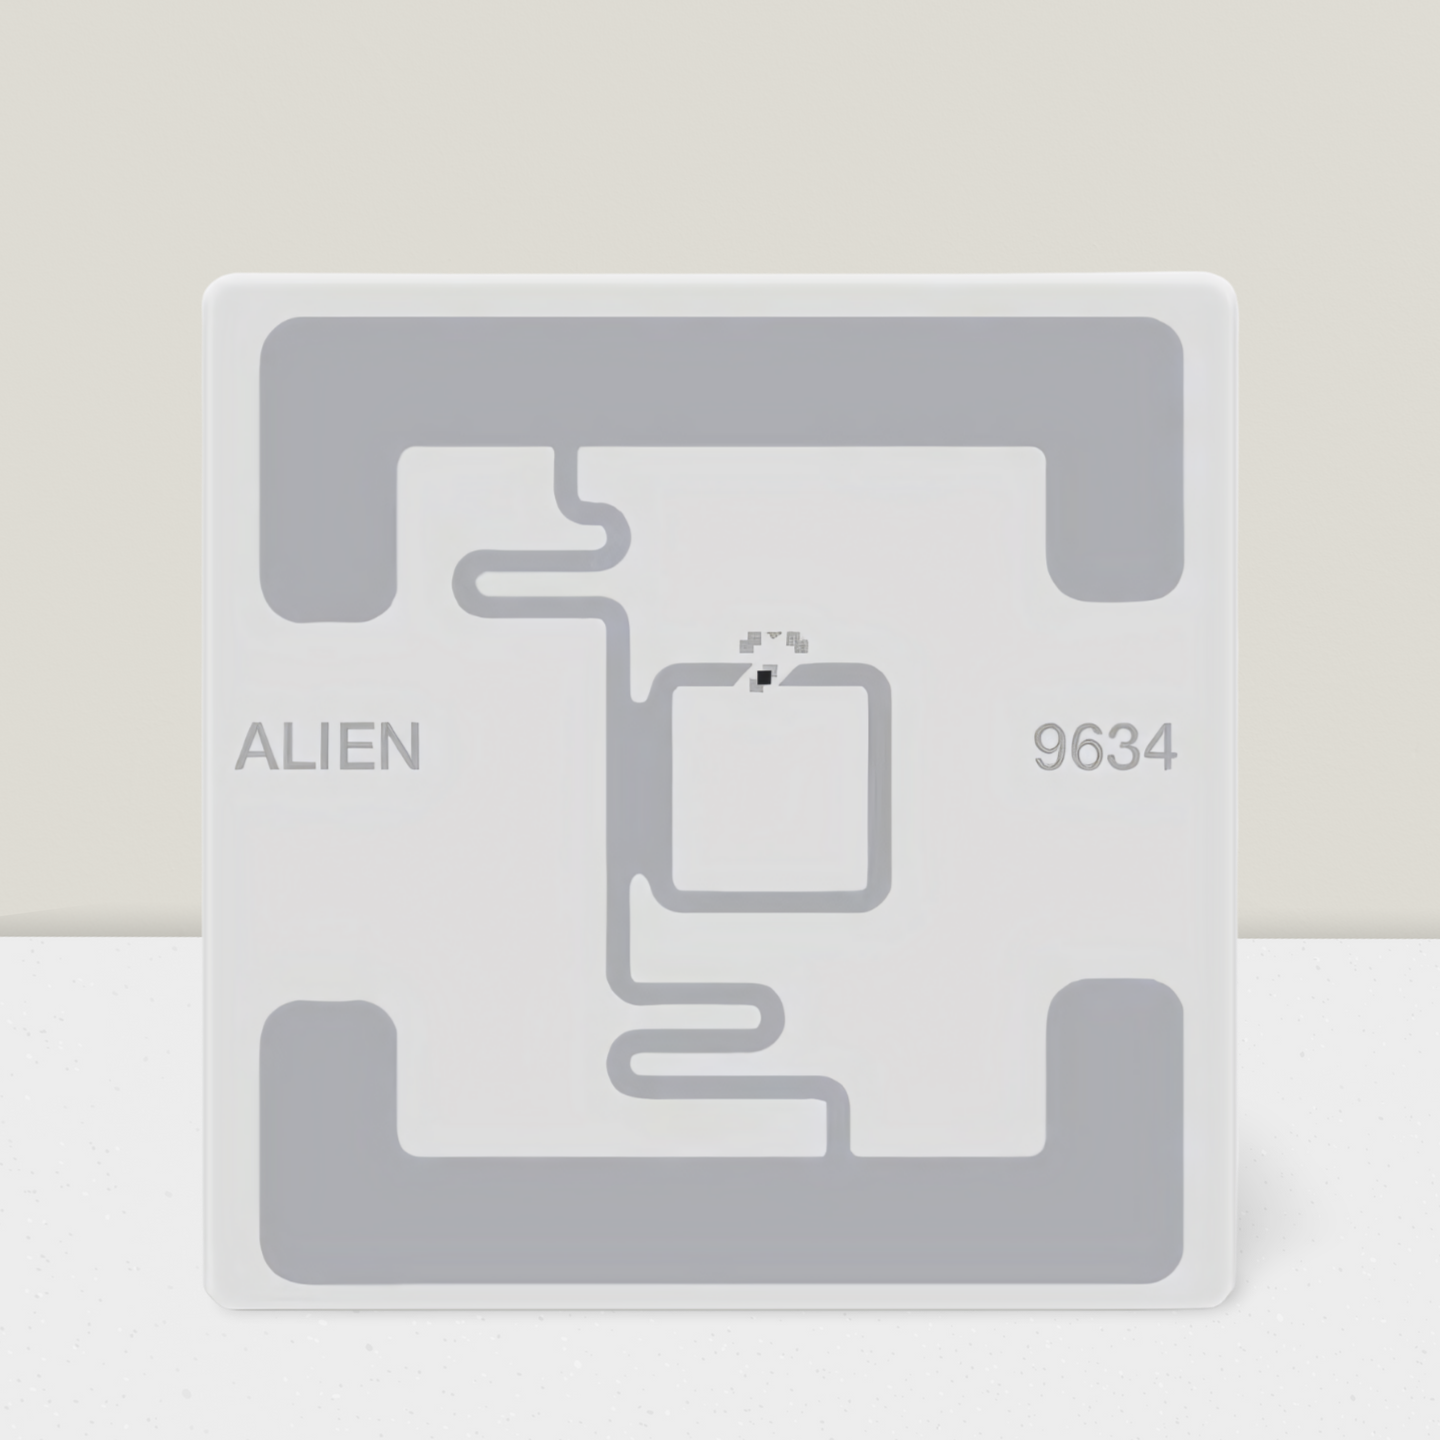 Alien 2x2 RFID sticker ALN-9634 White Wet Inlay Higgs-3 RFID TAG